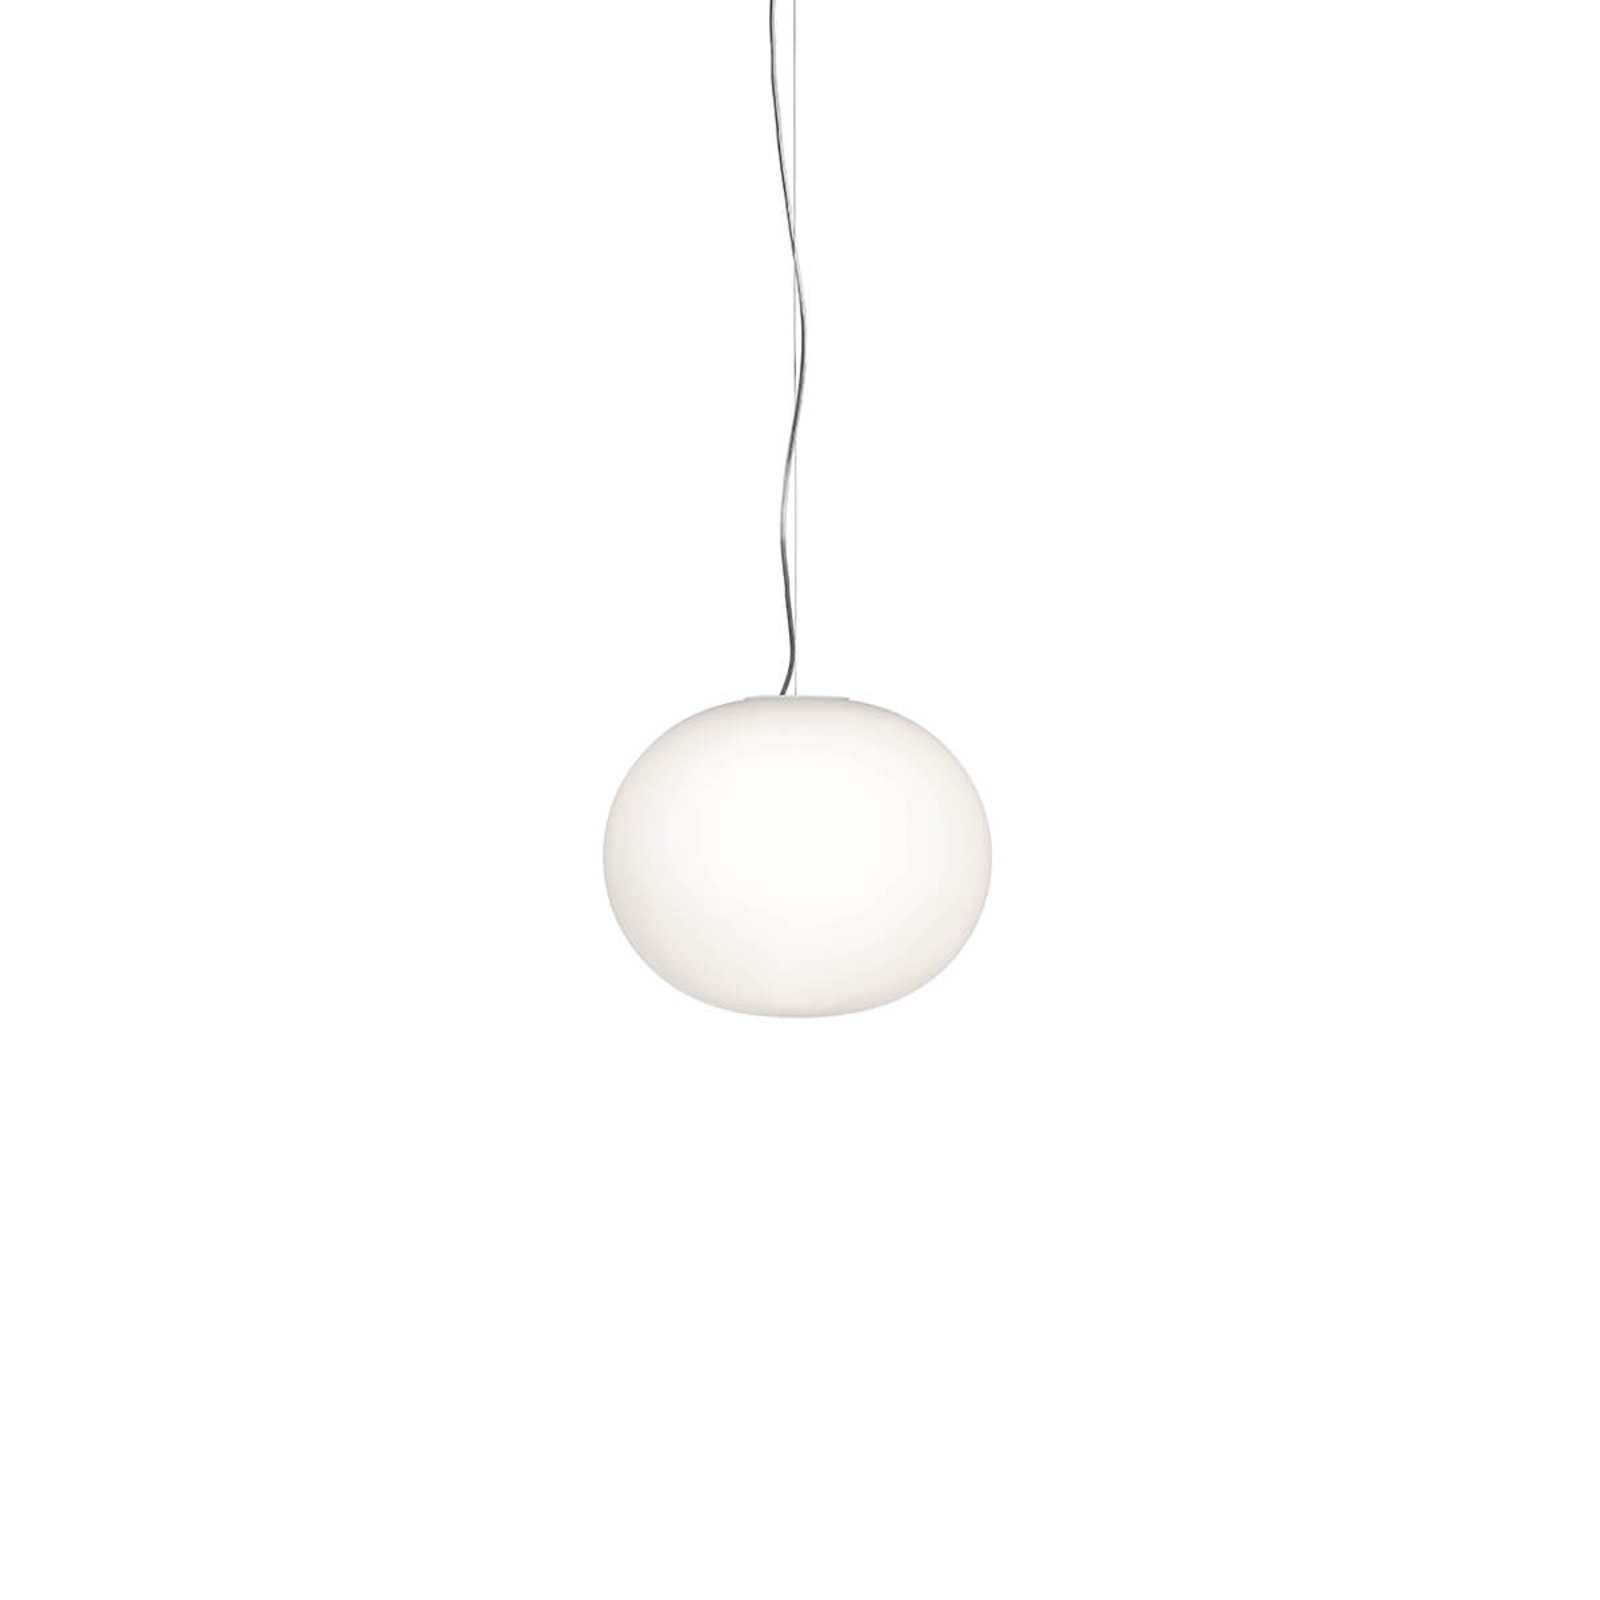 FLOS Glo-Ball - kulatá závěsná lampa 33 cm